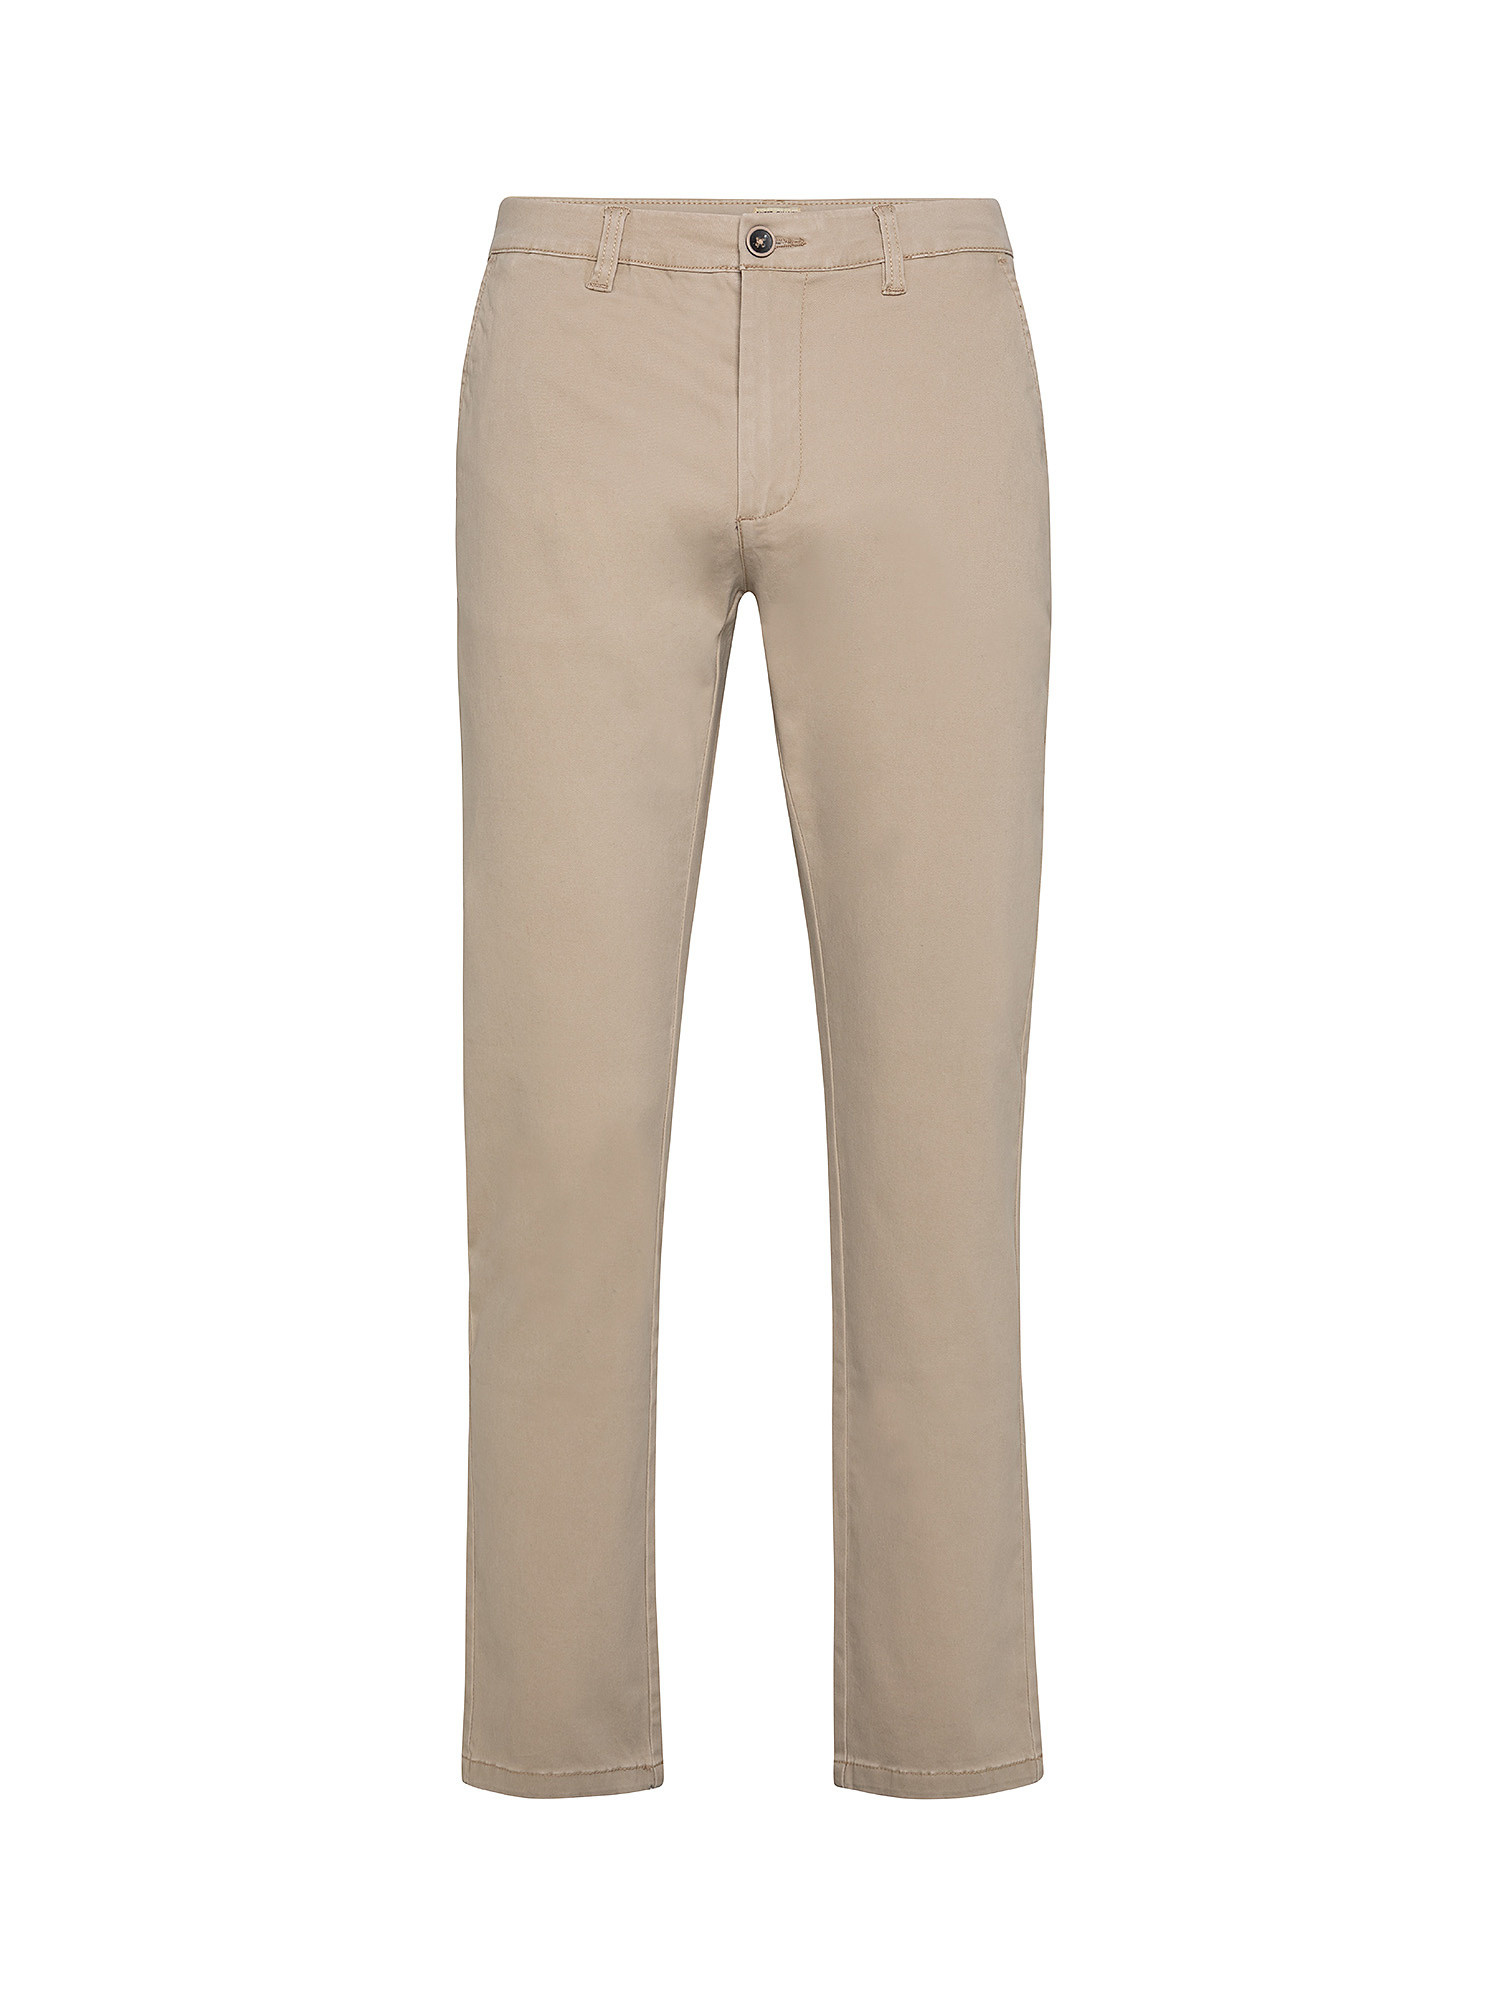 Pantalone slim comfort fit in cotone elasticizzato, Beige, large image number 0